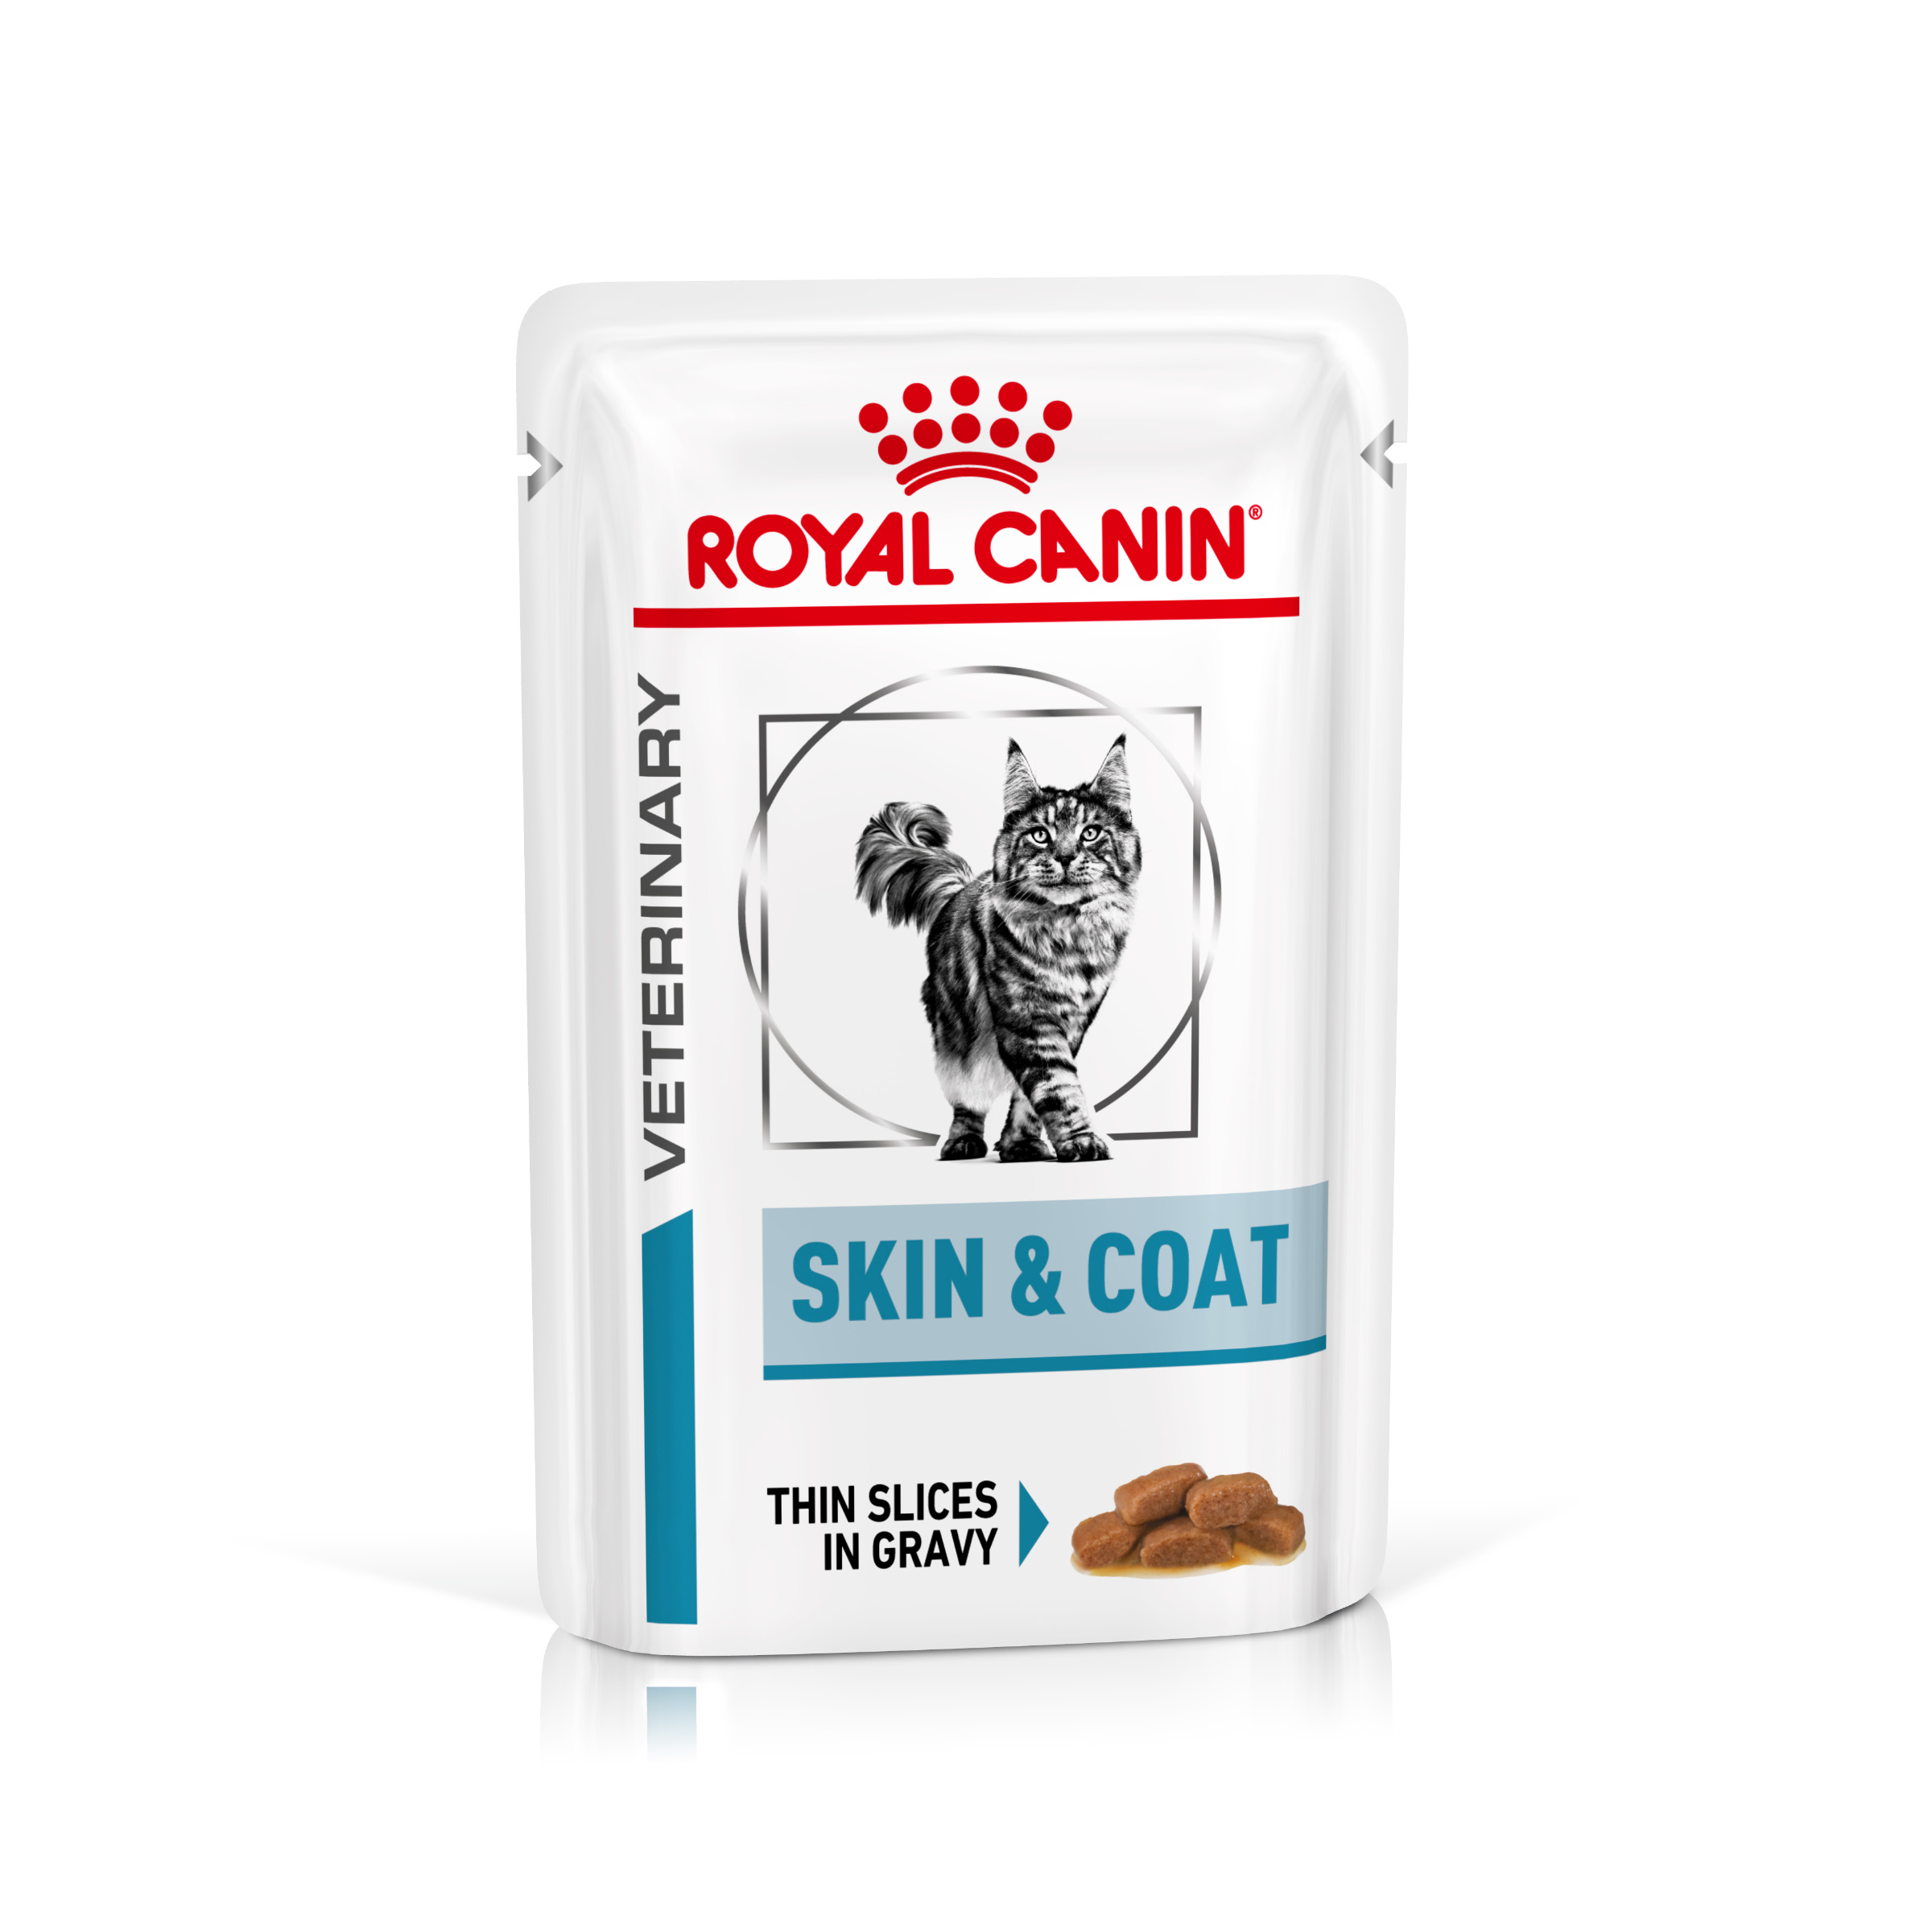 Royal Canin Veterinary Feline Skin & Coat - 12 x 85 g